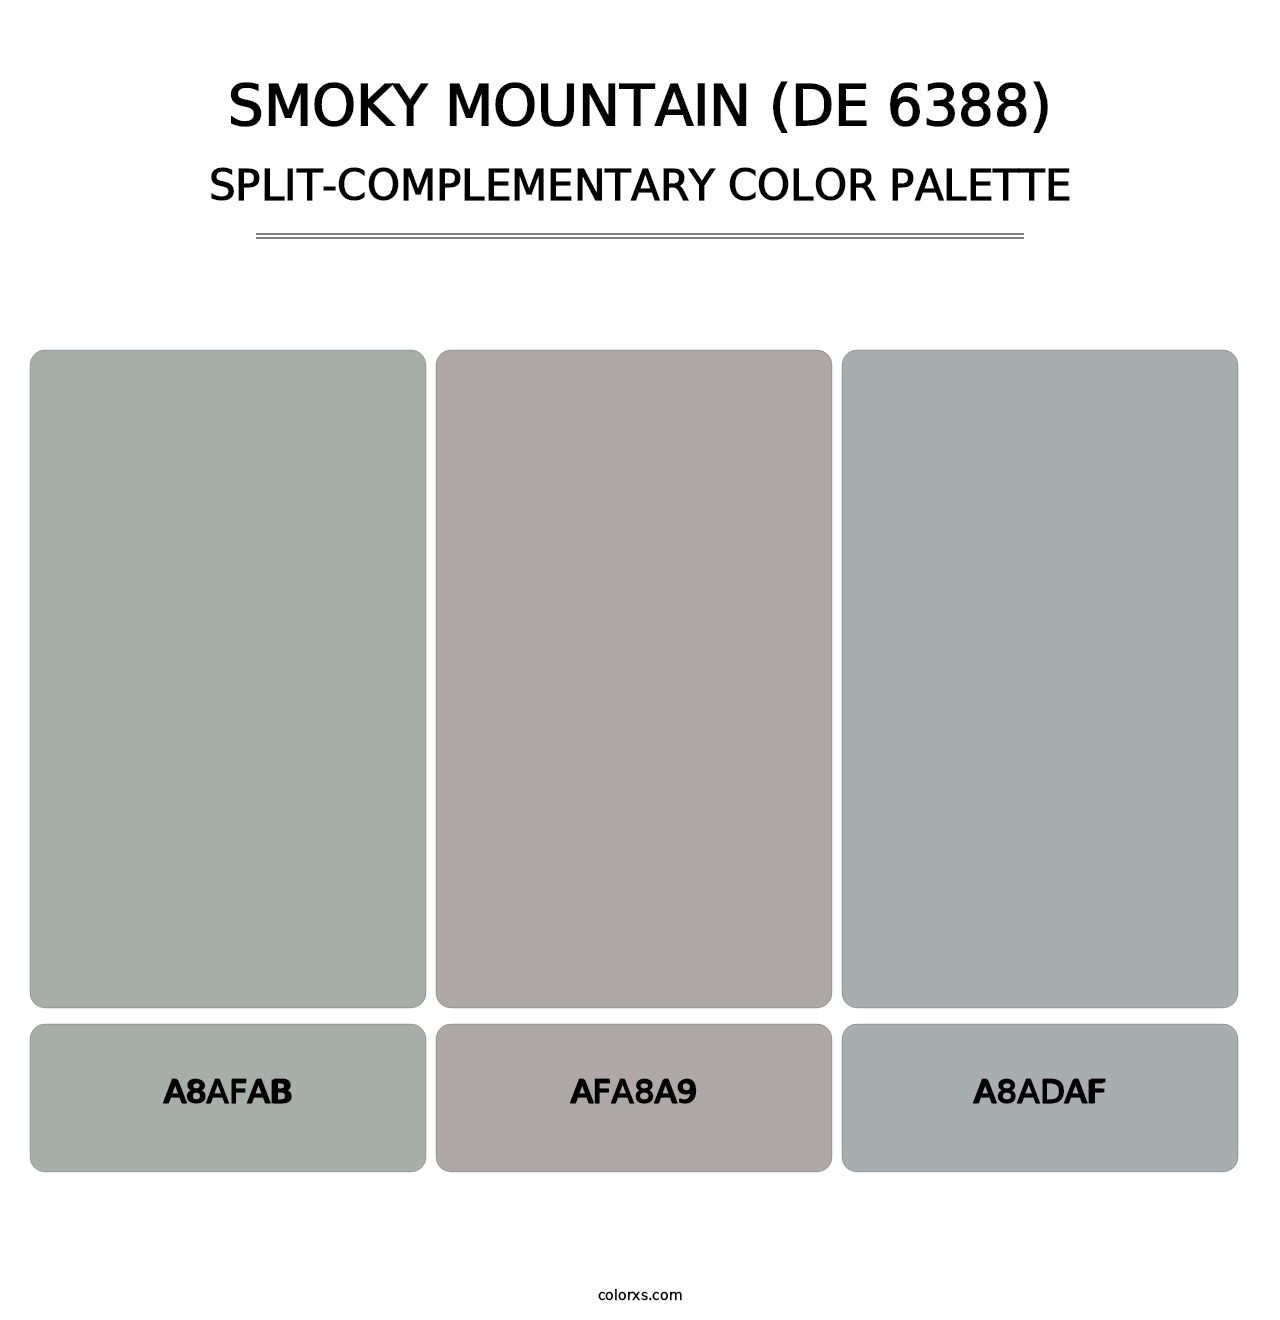 Smoky Mountain (DE 6388) - Split-Complementary Color Palette